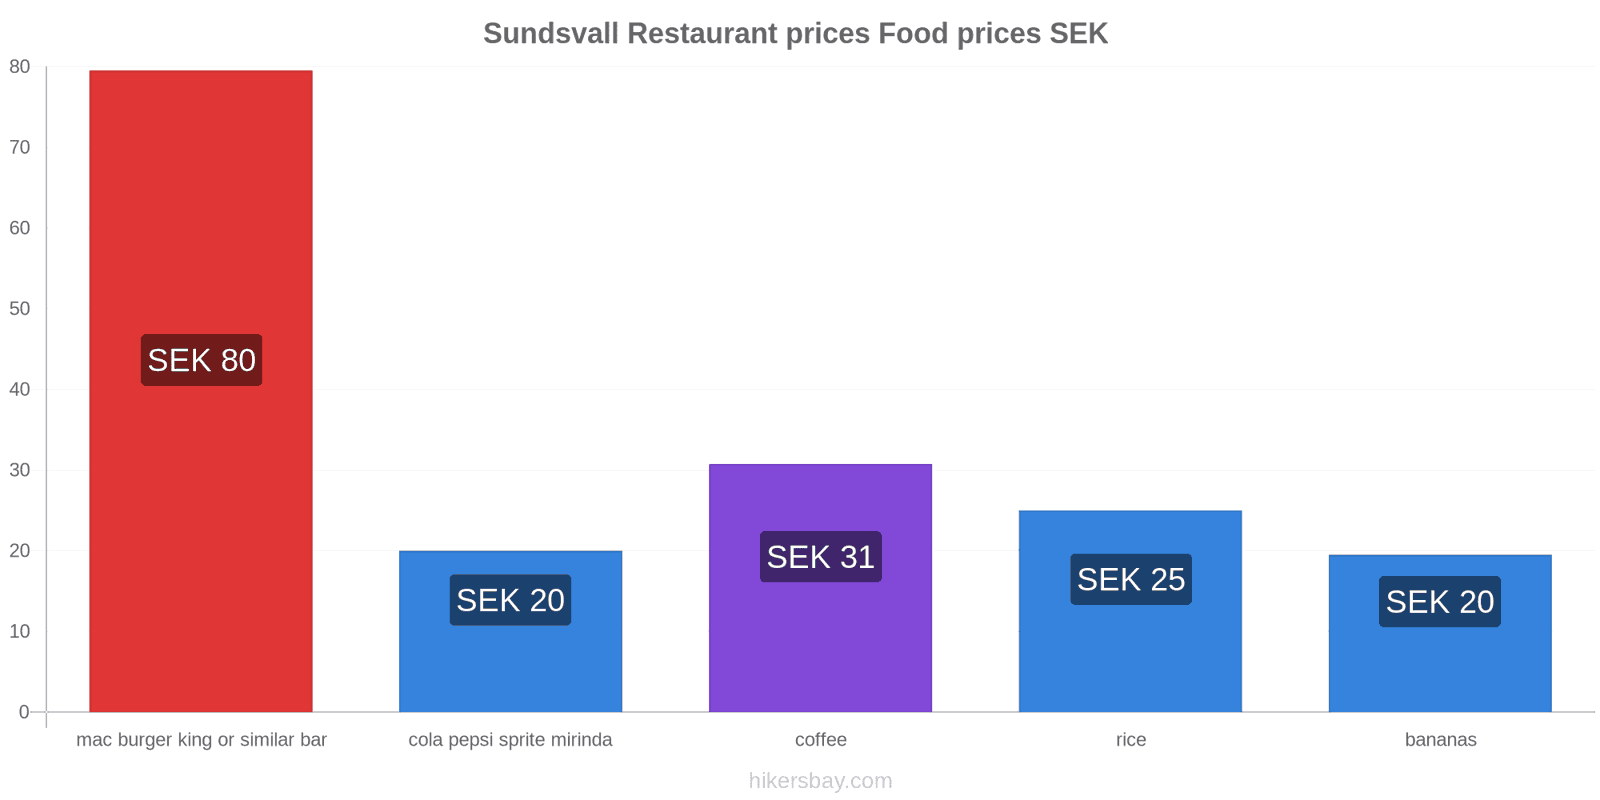 Sundsvall price changes hikersbay.com